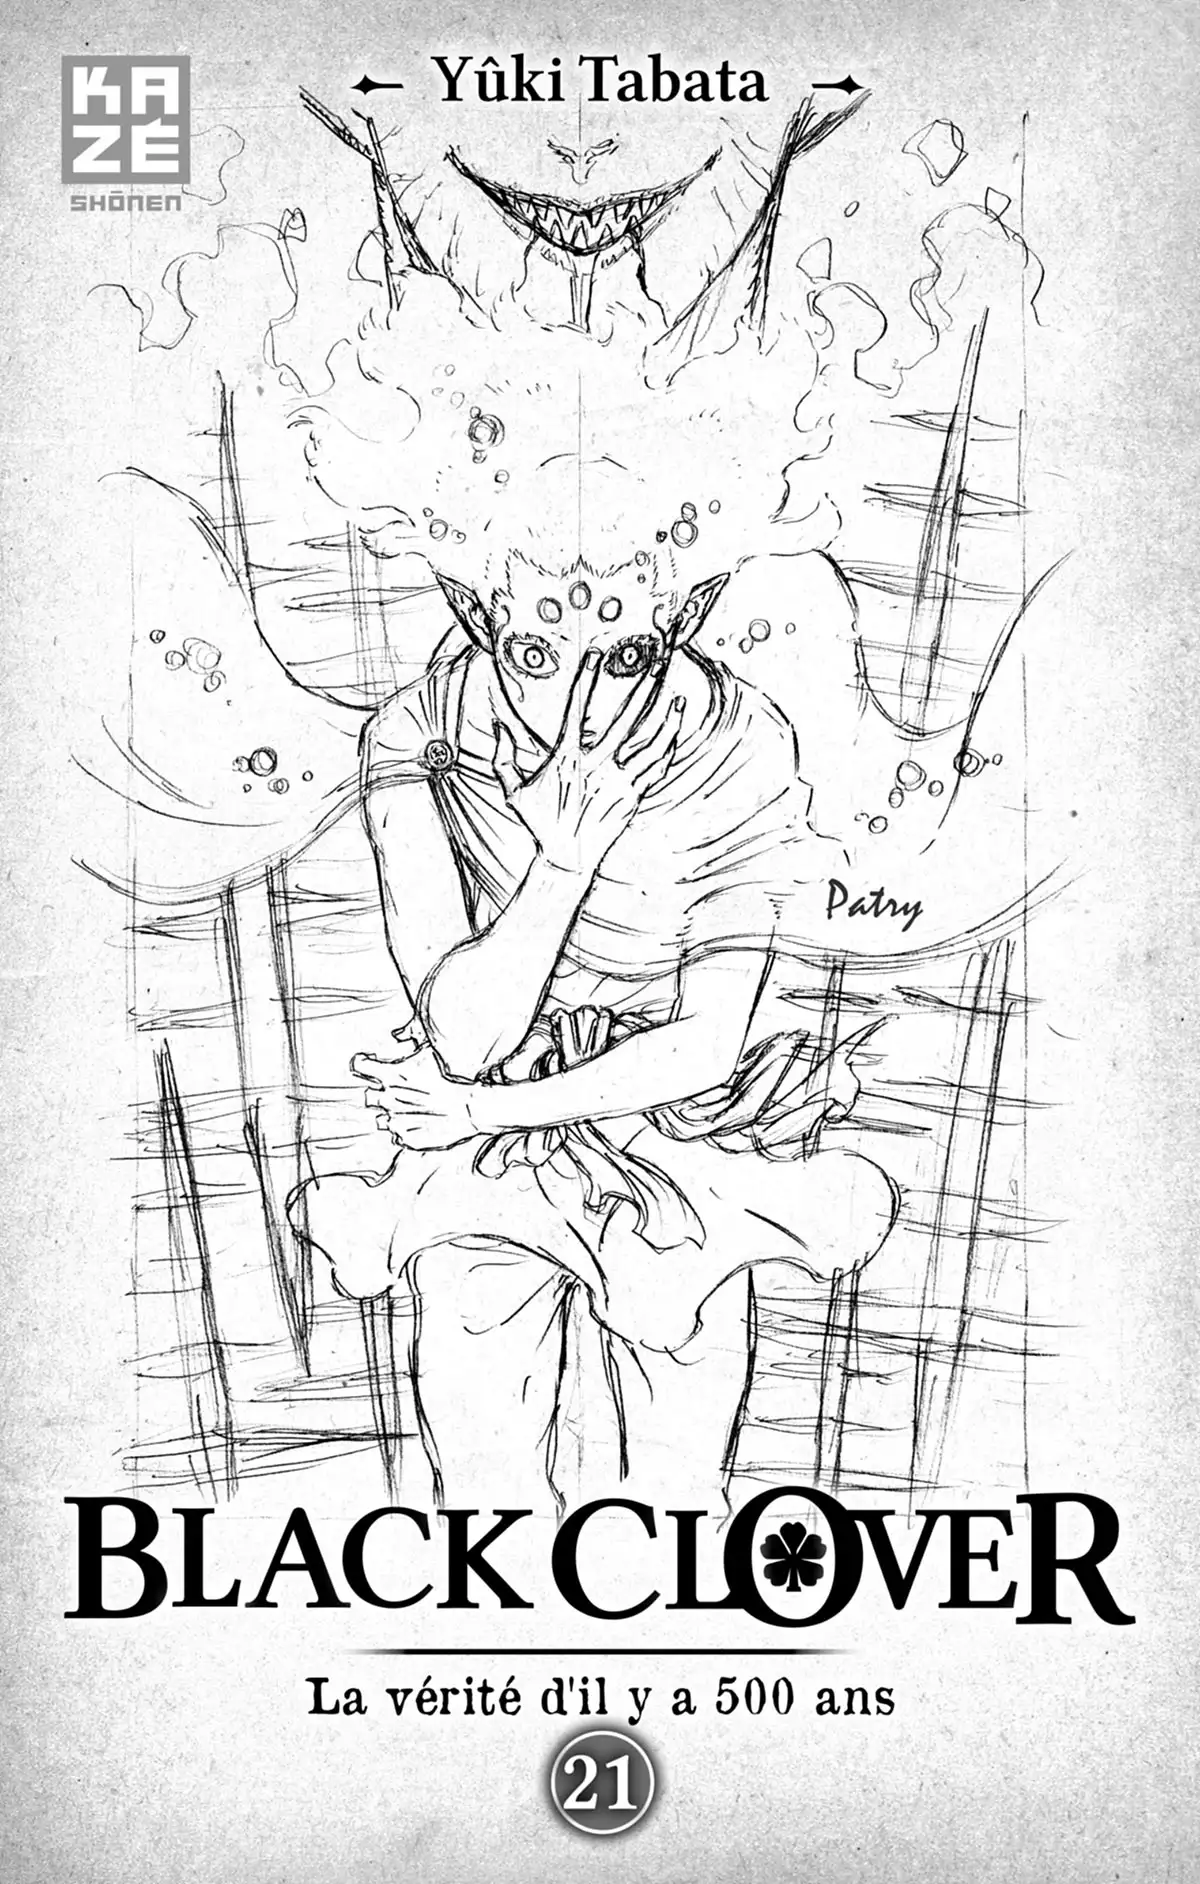 Black Clover Volume 21 page 2